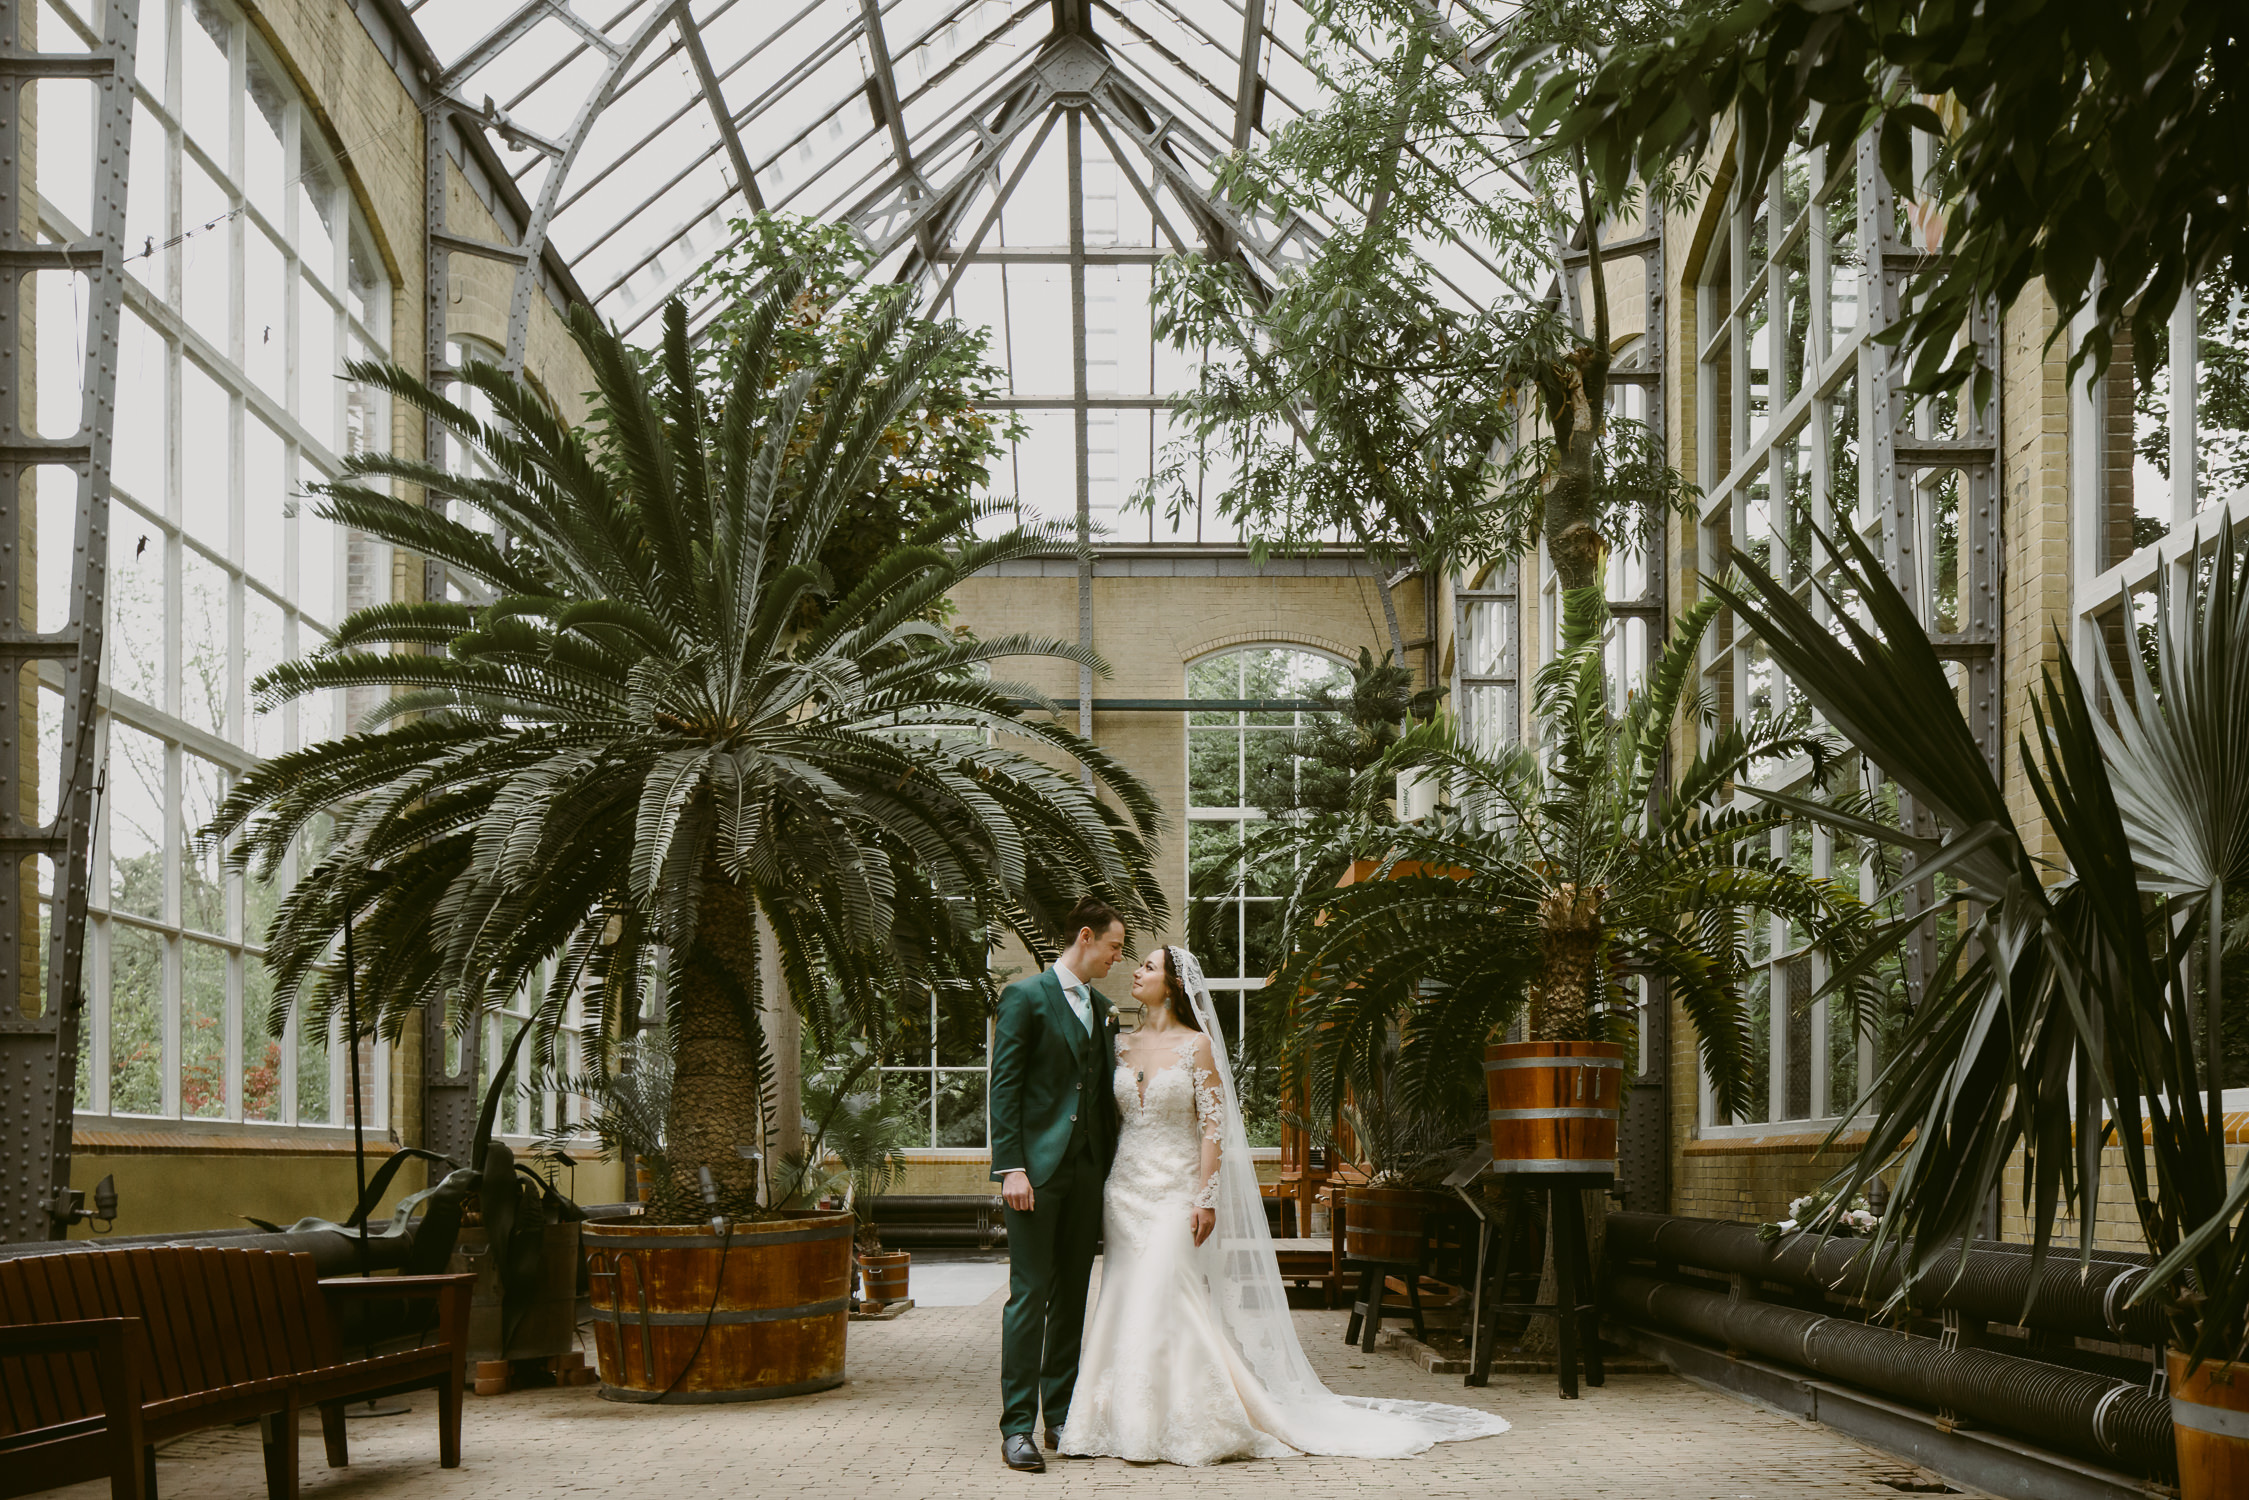 the best wedding photography amsterdam - couple portraits at the hortus botanicus